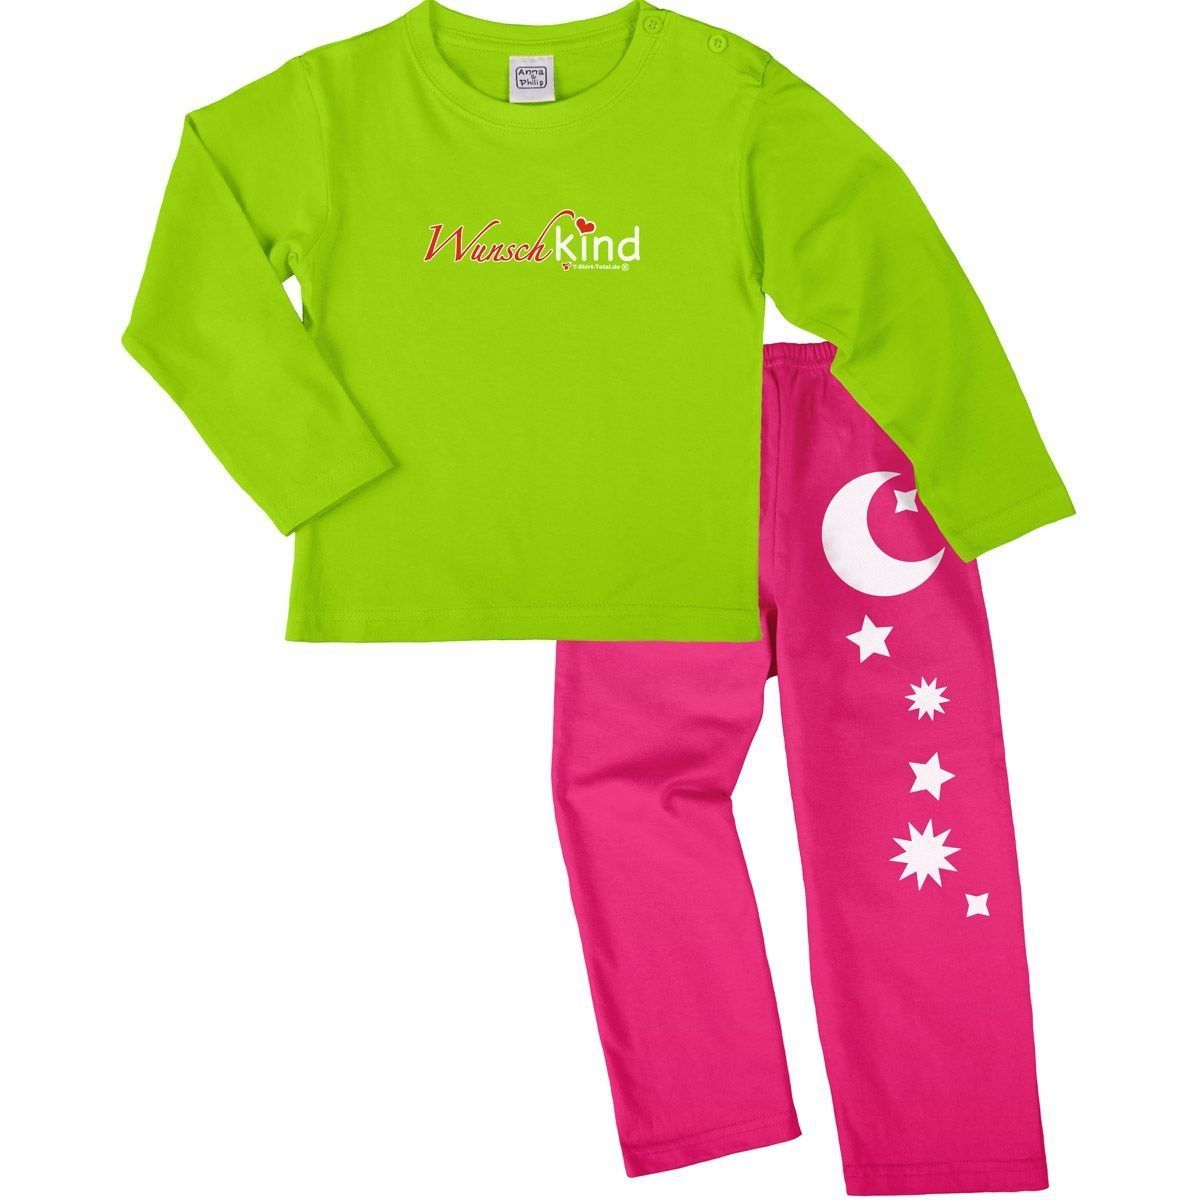 Wunschkind Pyjama Set hellgrün / pink 80 / 86